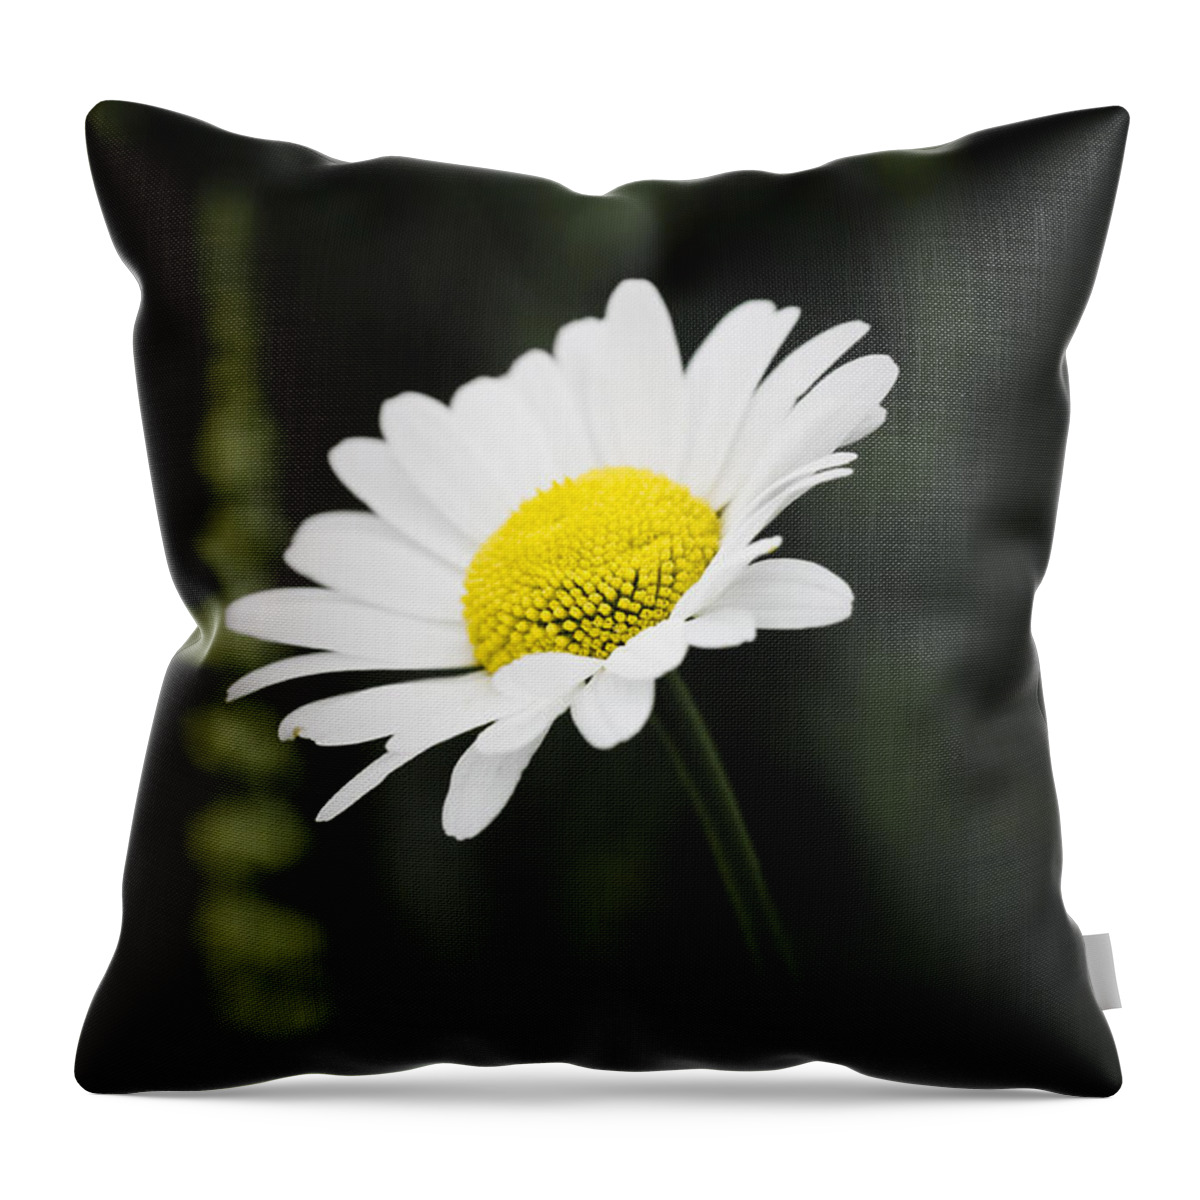 Flower Throw Pillow featuring the photograph Single wild daisy by Simon Bratt